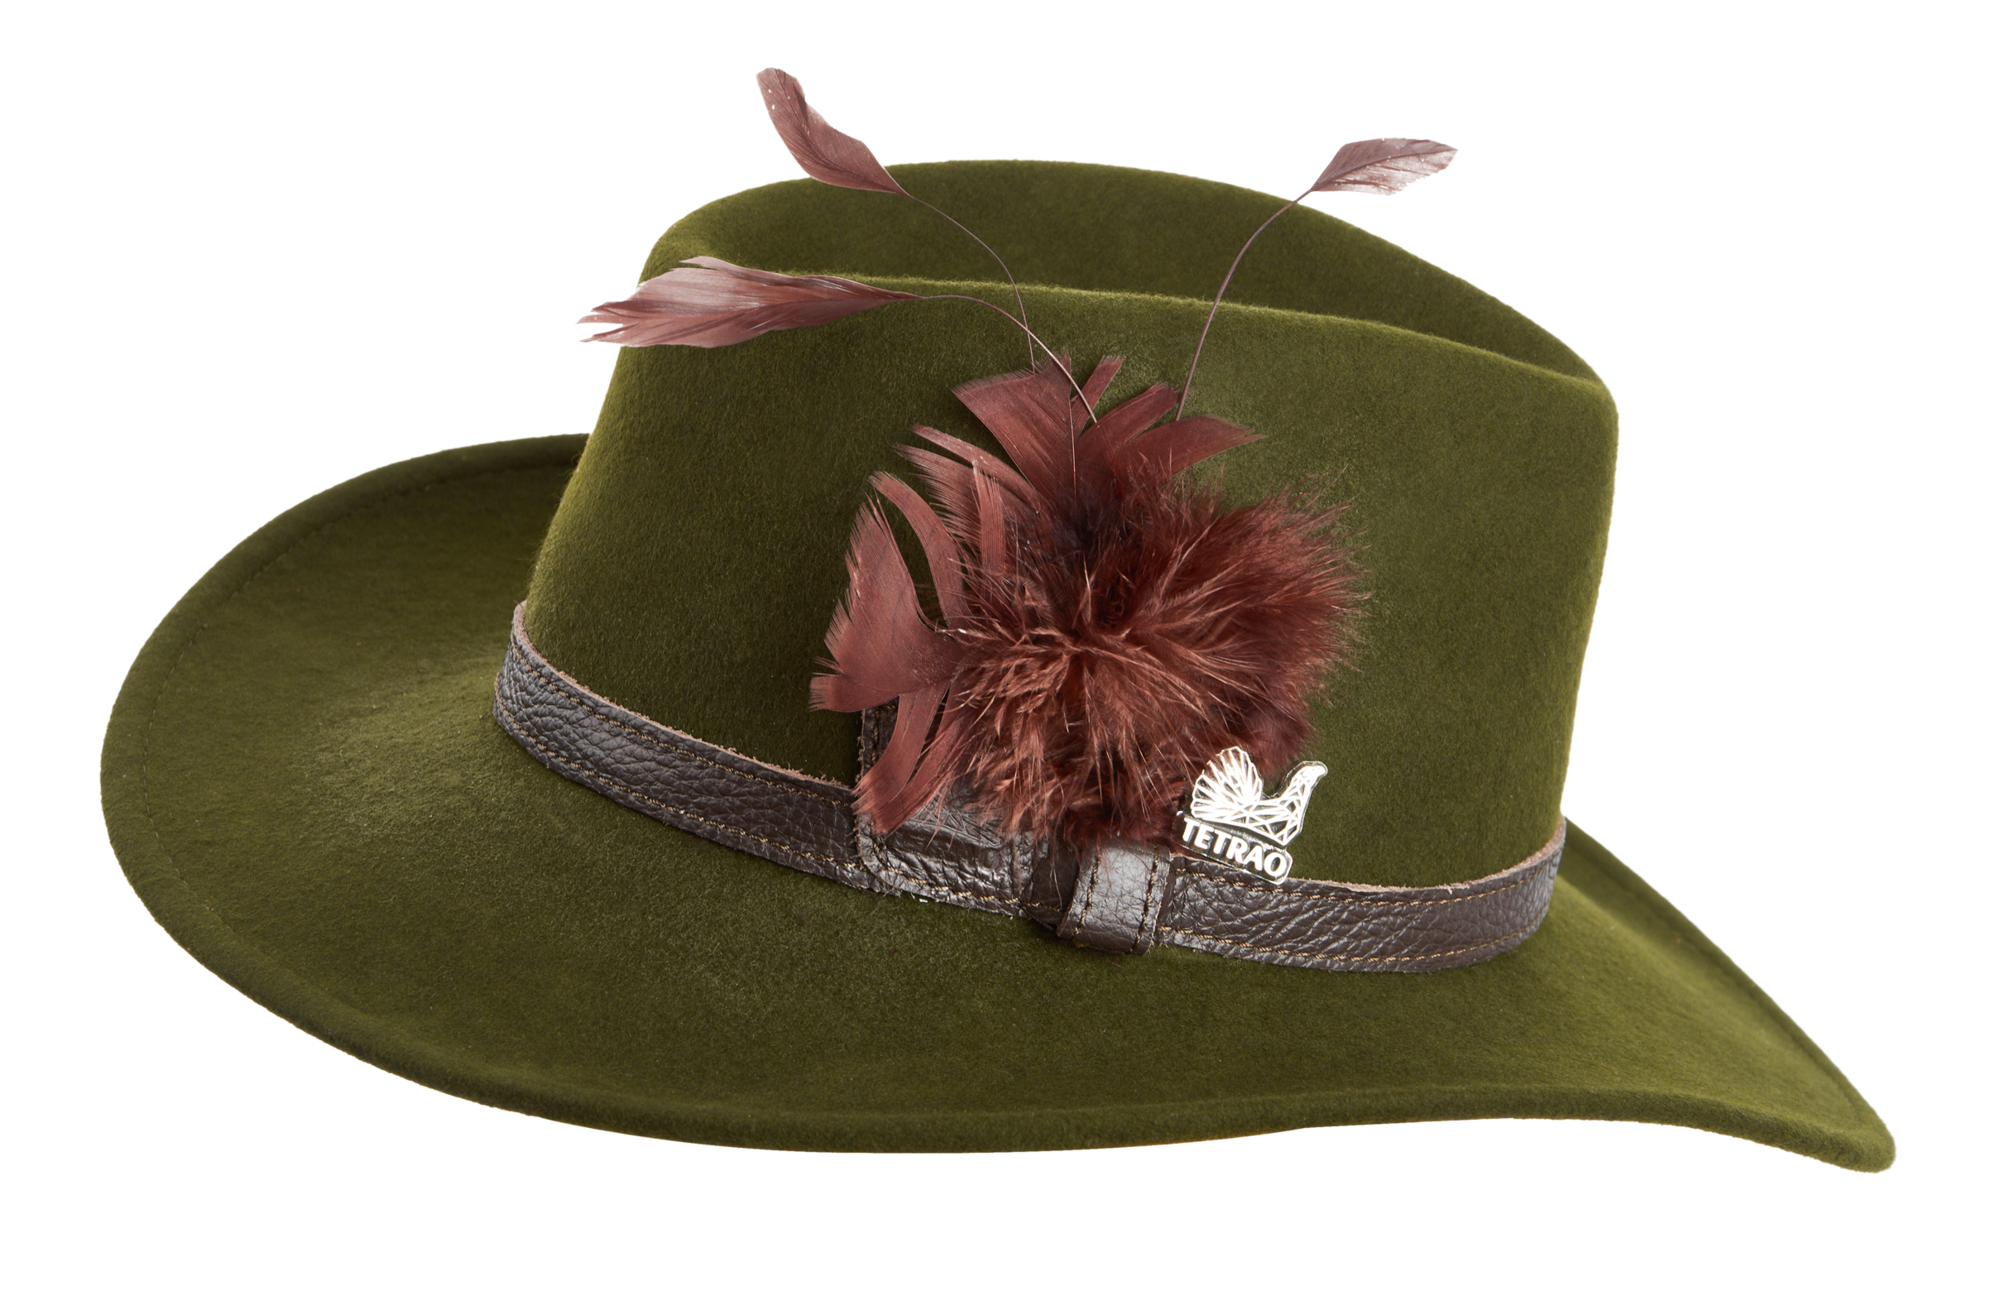 Dámsky poľovnícky klobúk TETRAO - s hnedým remienkom zelený 55  